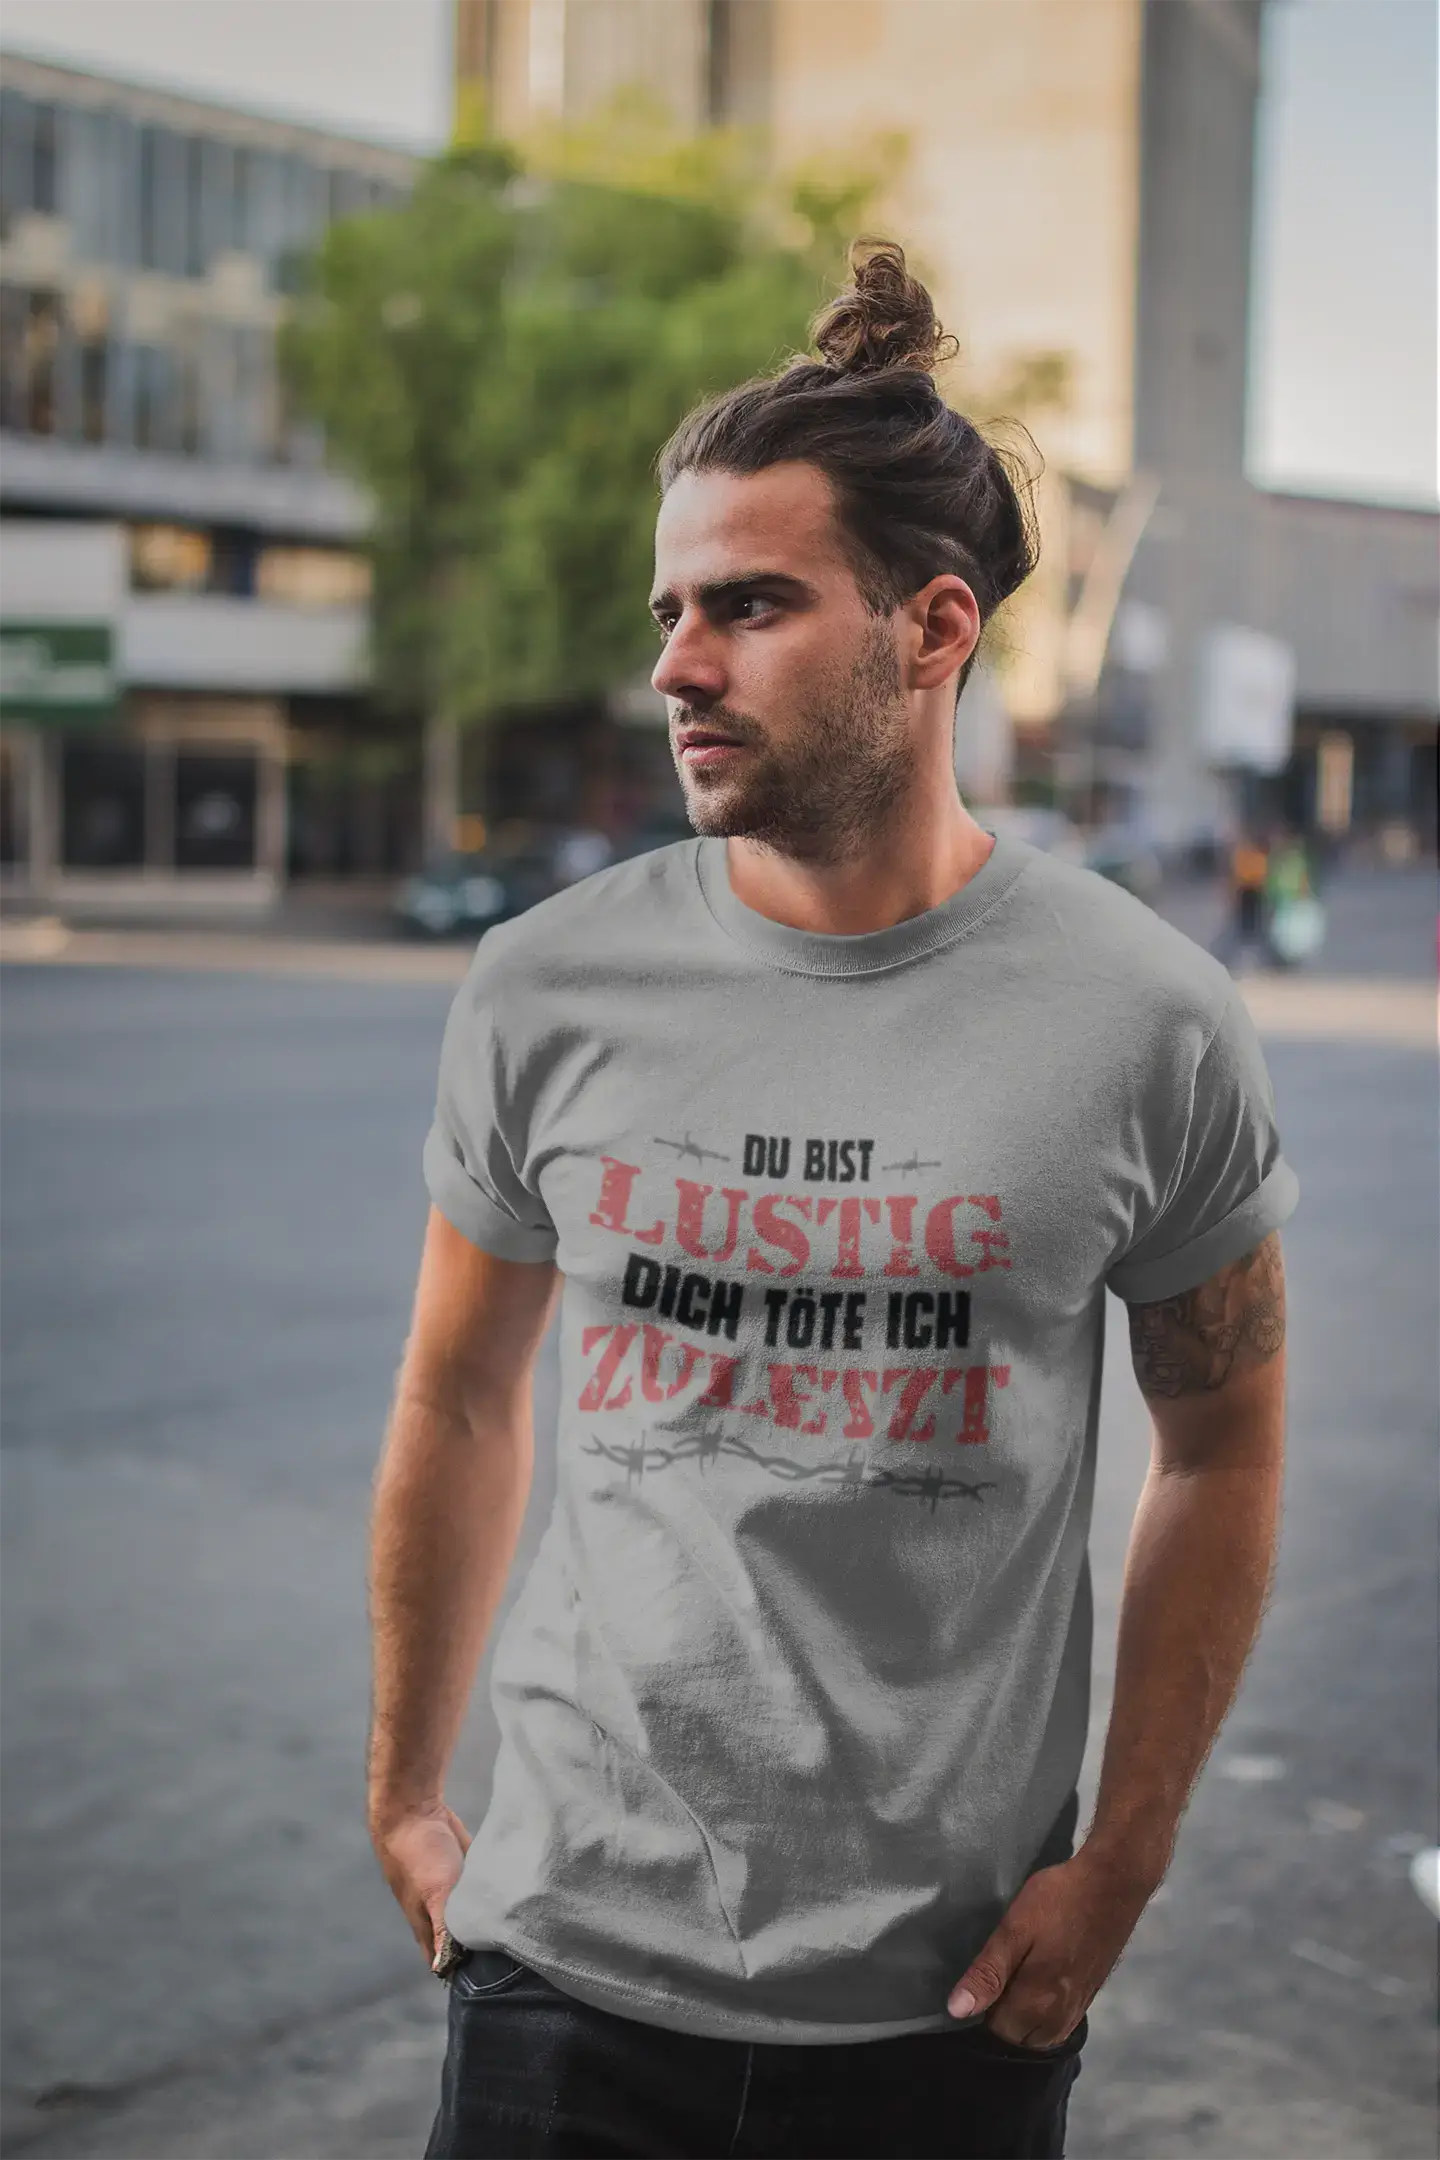 Men's Graphic T-Shirt Du bist lustig Gift Idea